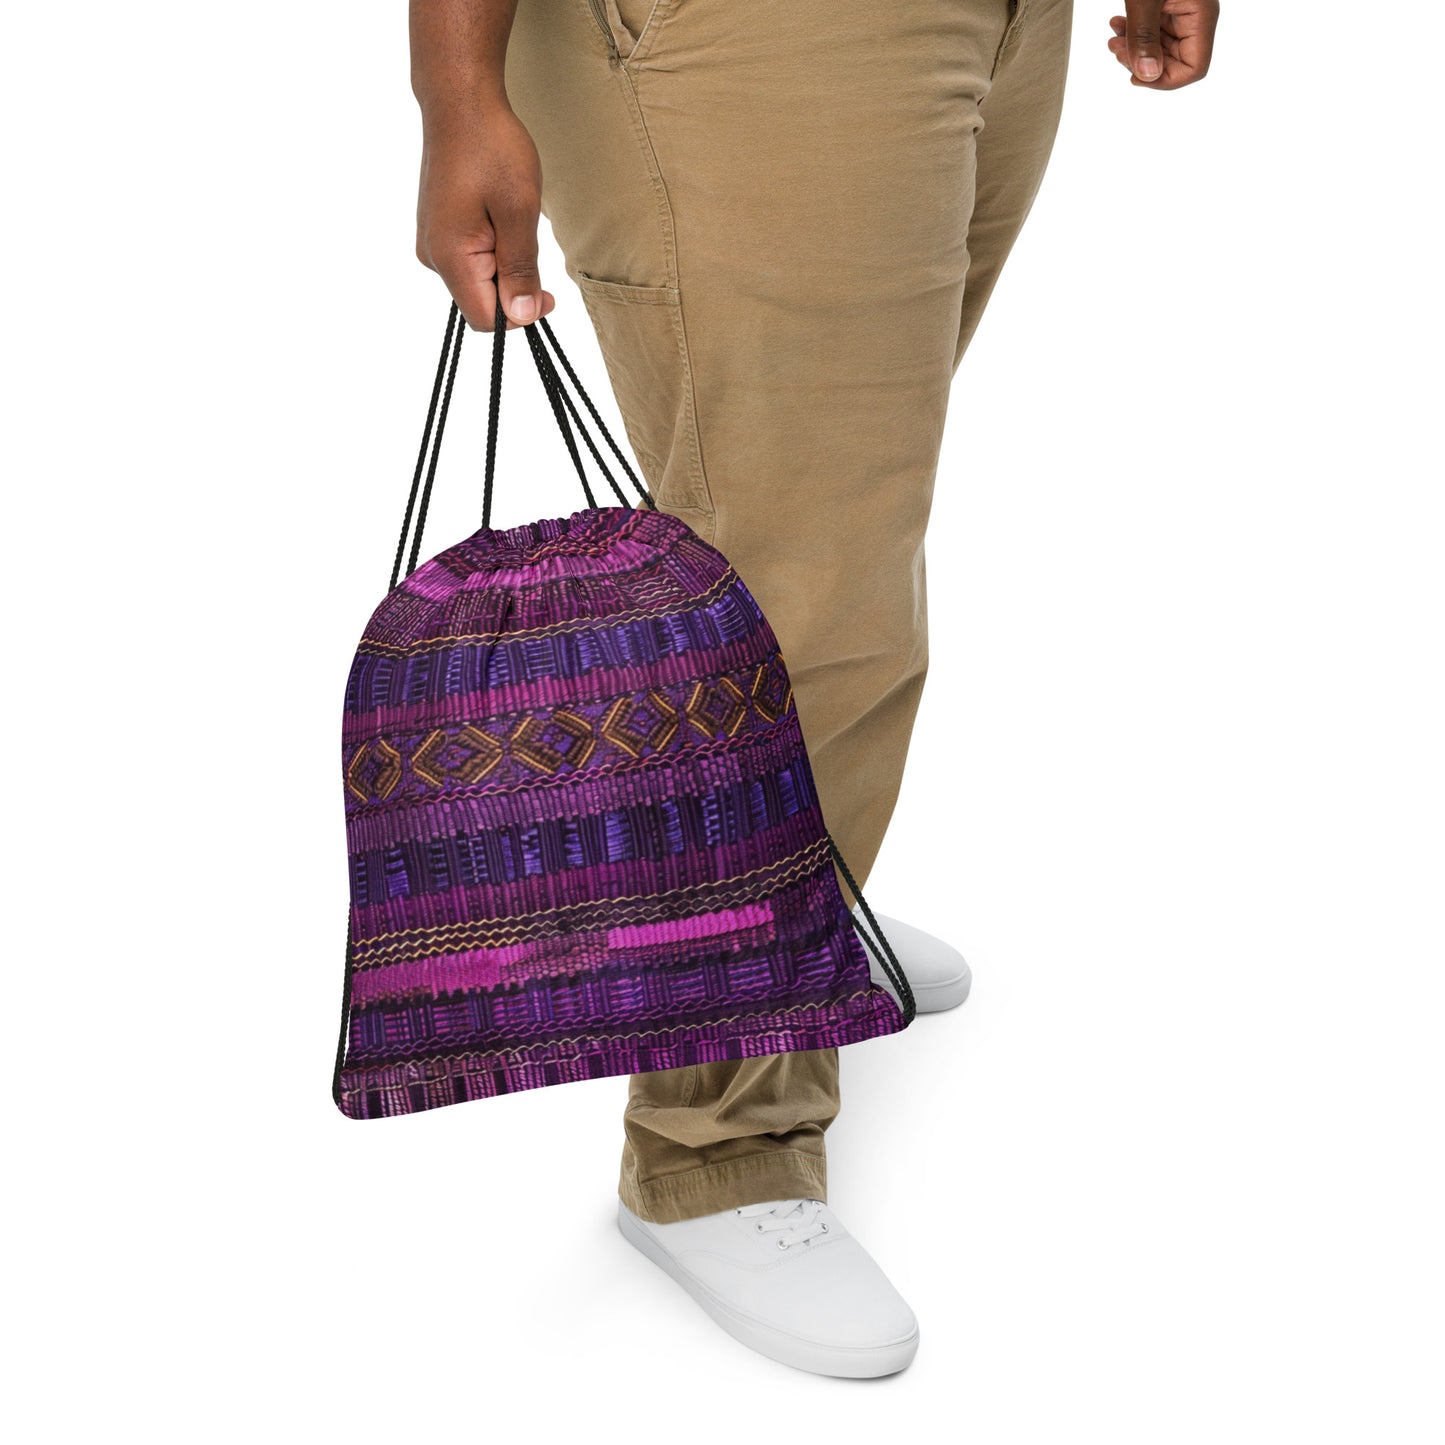 Huachuca Purple Drawstring bag